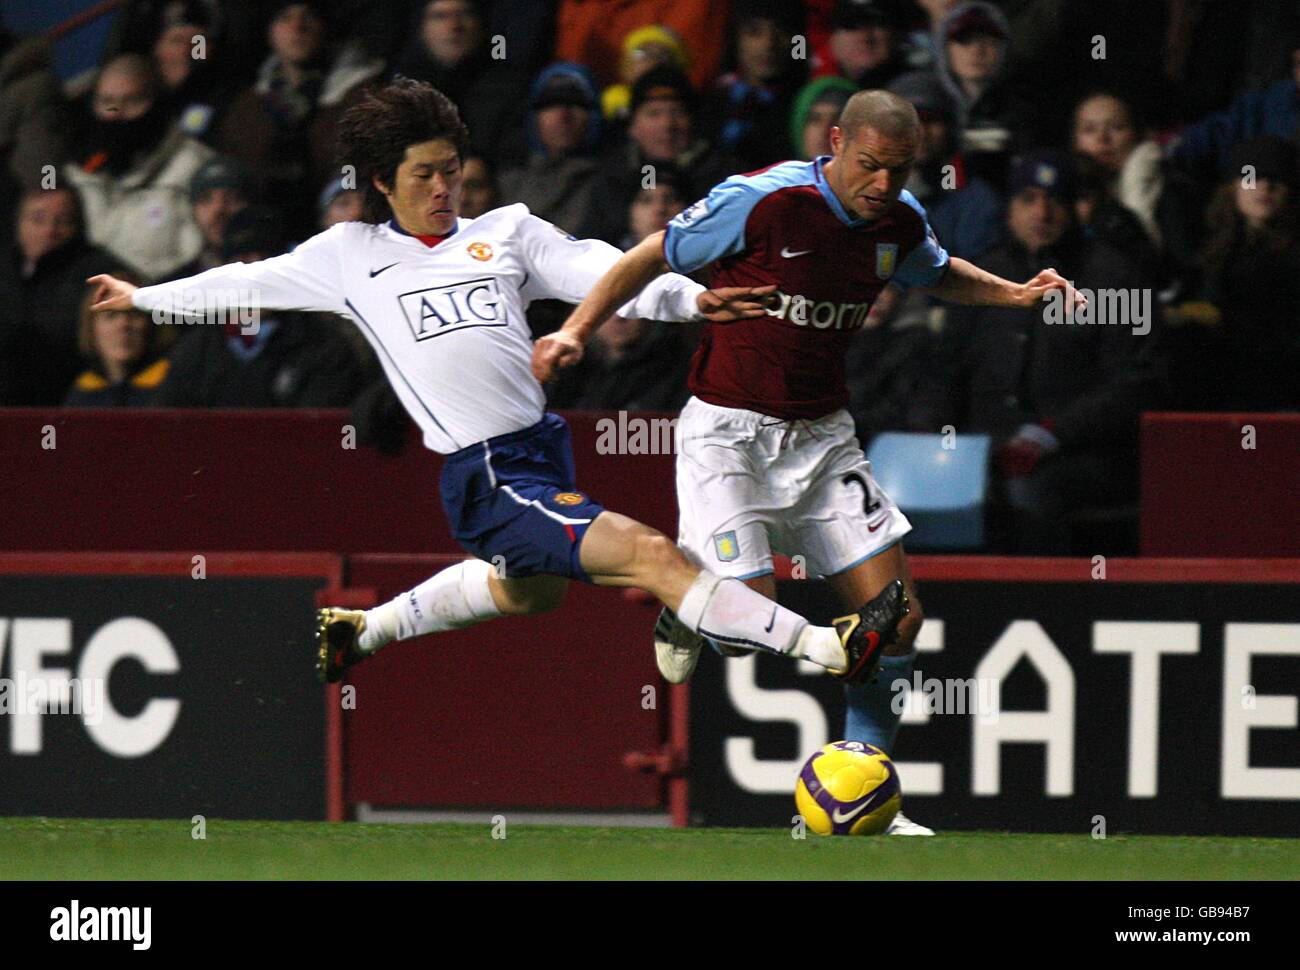 Soccer - Barclays Premier League - Aston Villa v Manchester United - Villa Park. Aston Villa's Luke Young (r) and Manchester United's Ji-Sung Park battle for the ball Stock Photo